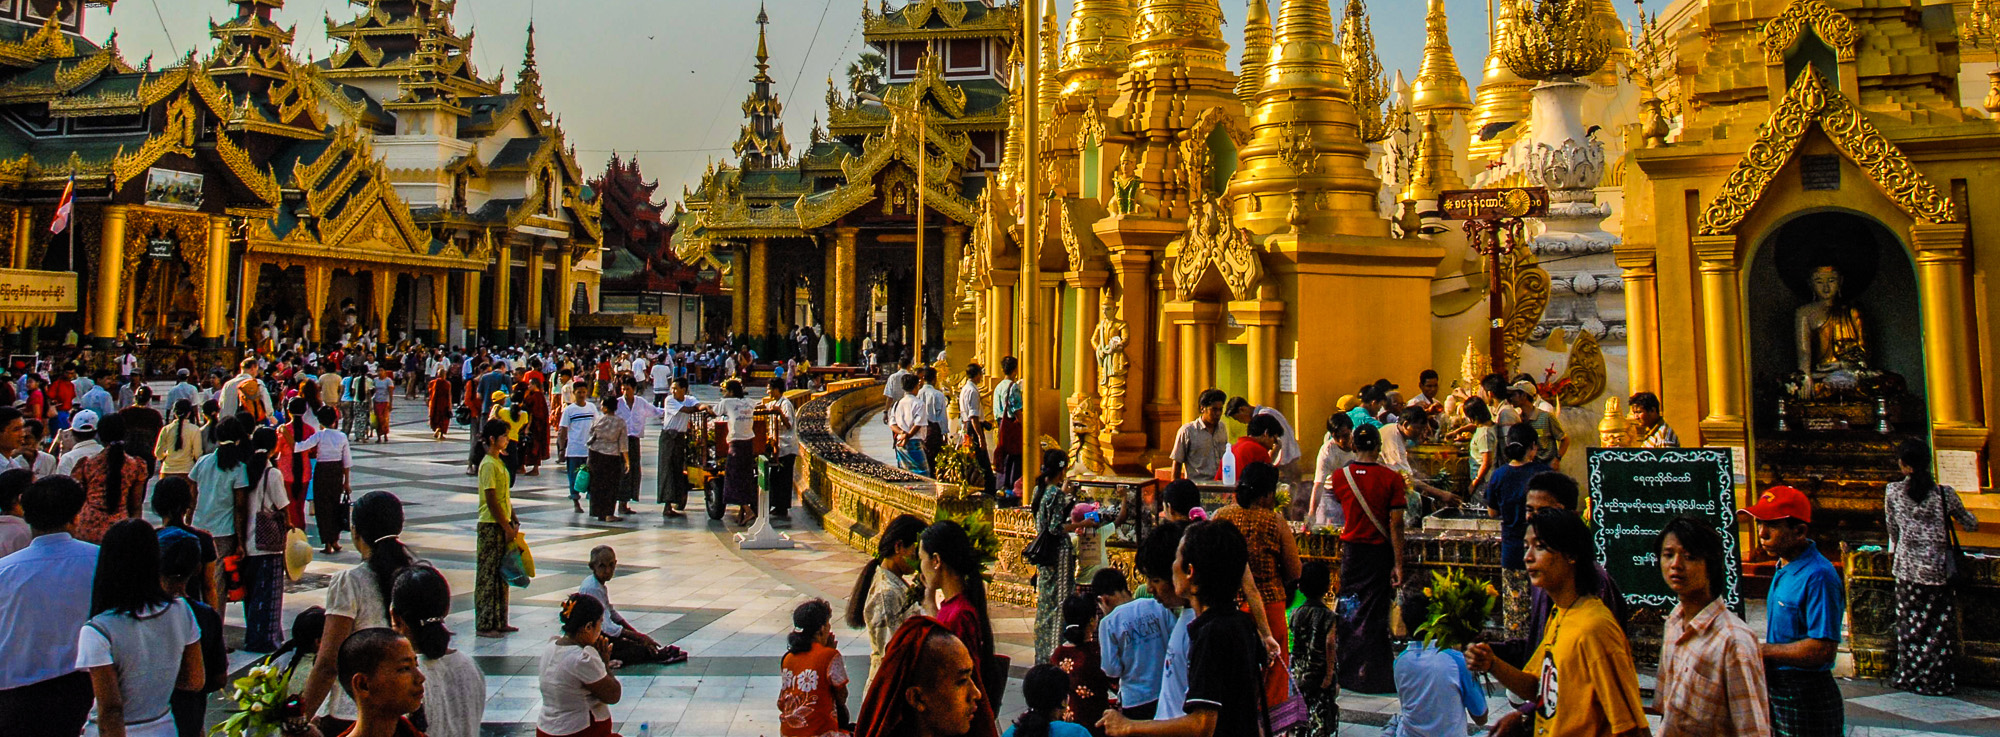 Birma, the Golden